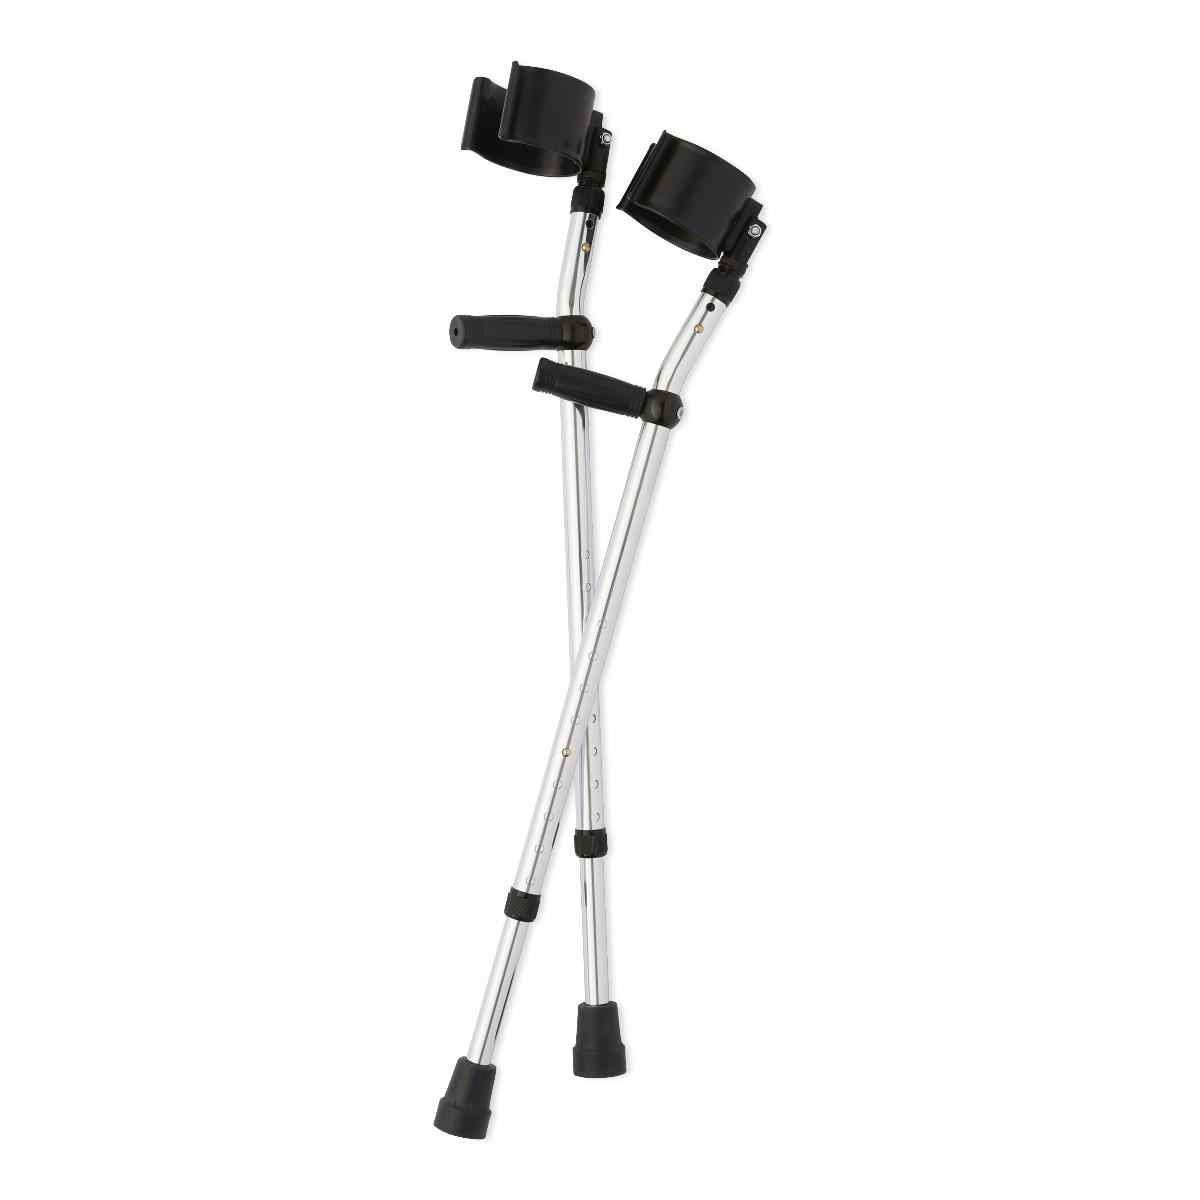 Medline Guardian Aluminum Forearm Crutches